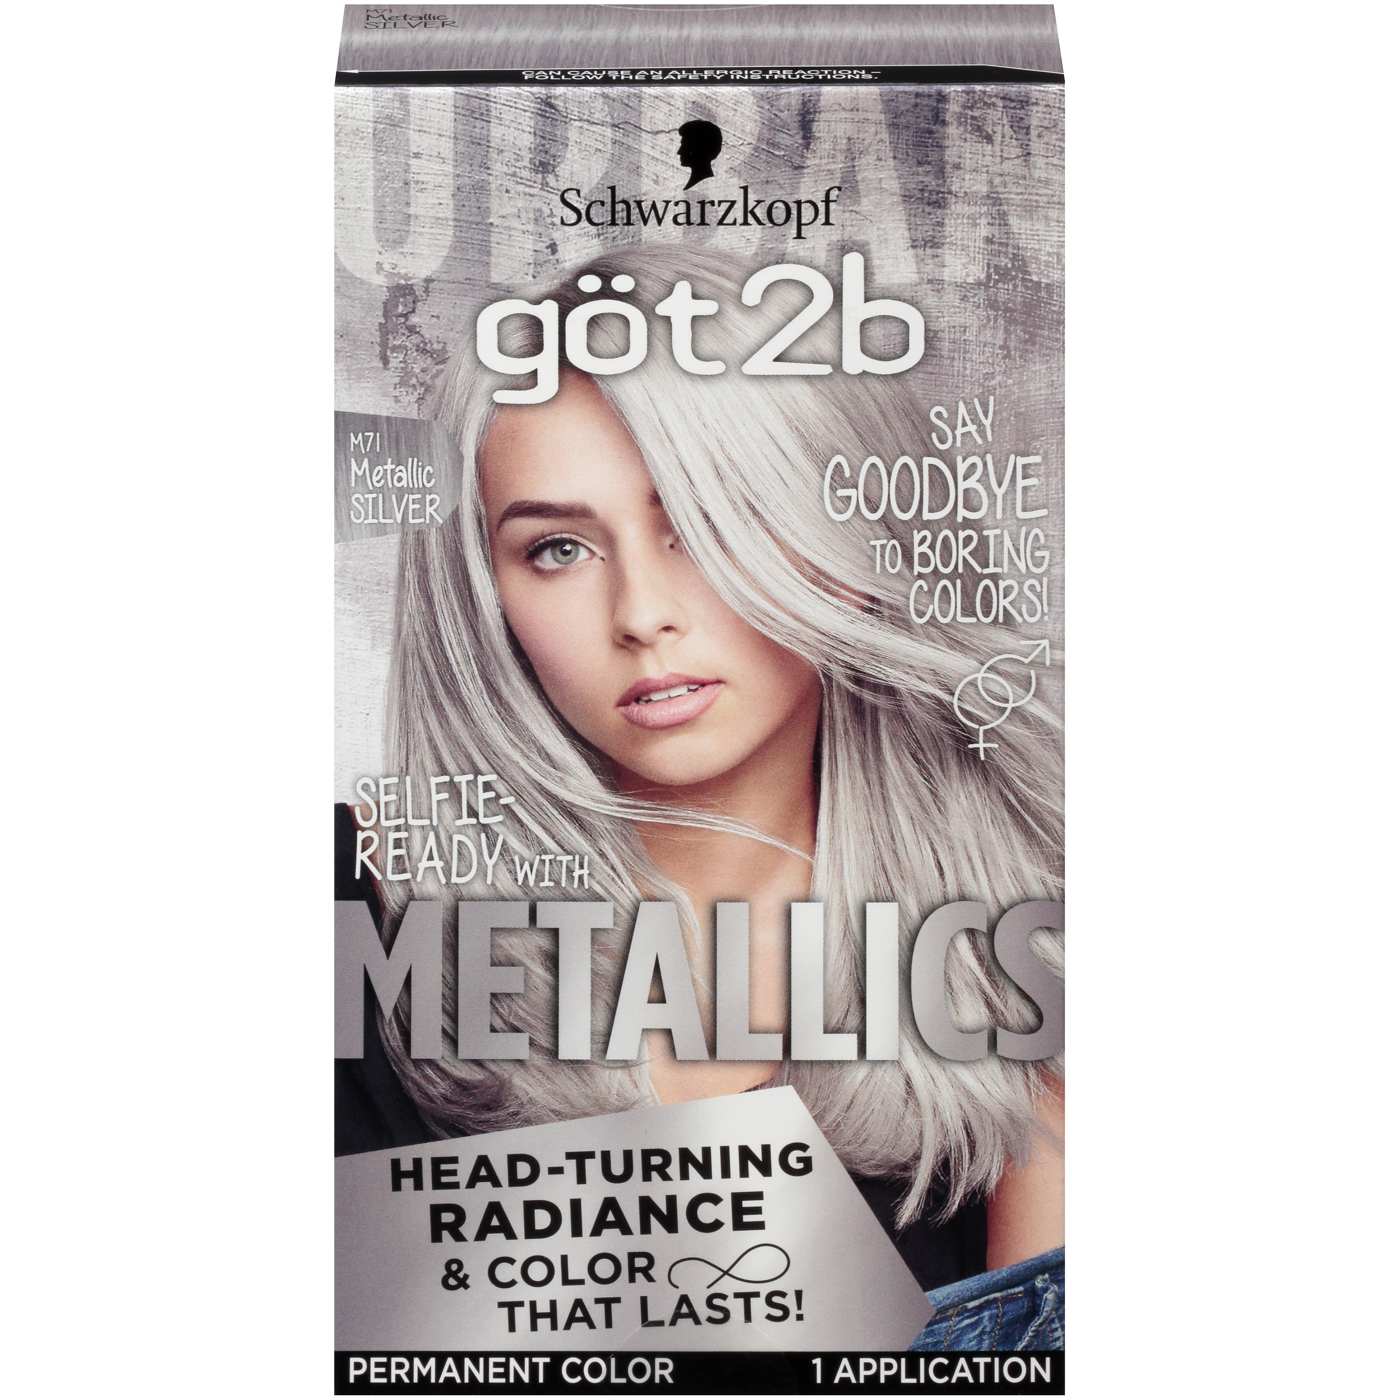 Got2b Metallics Permanent Hair Color, M71 Metallics Silver; image 1 of 4